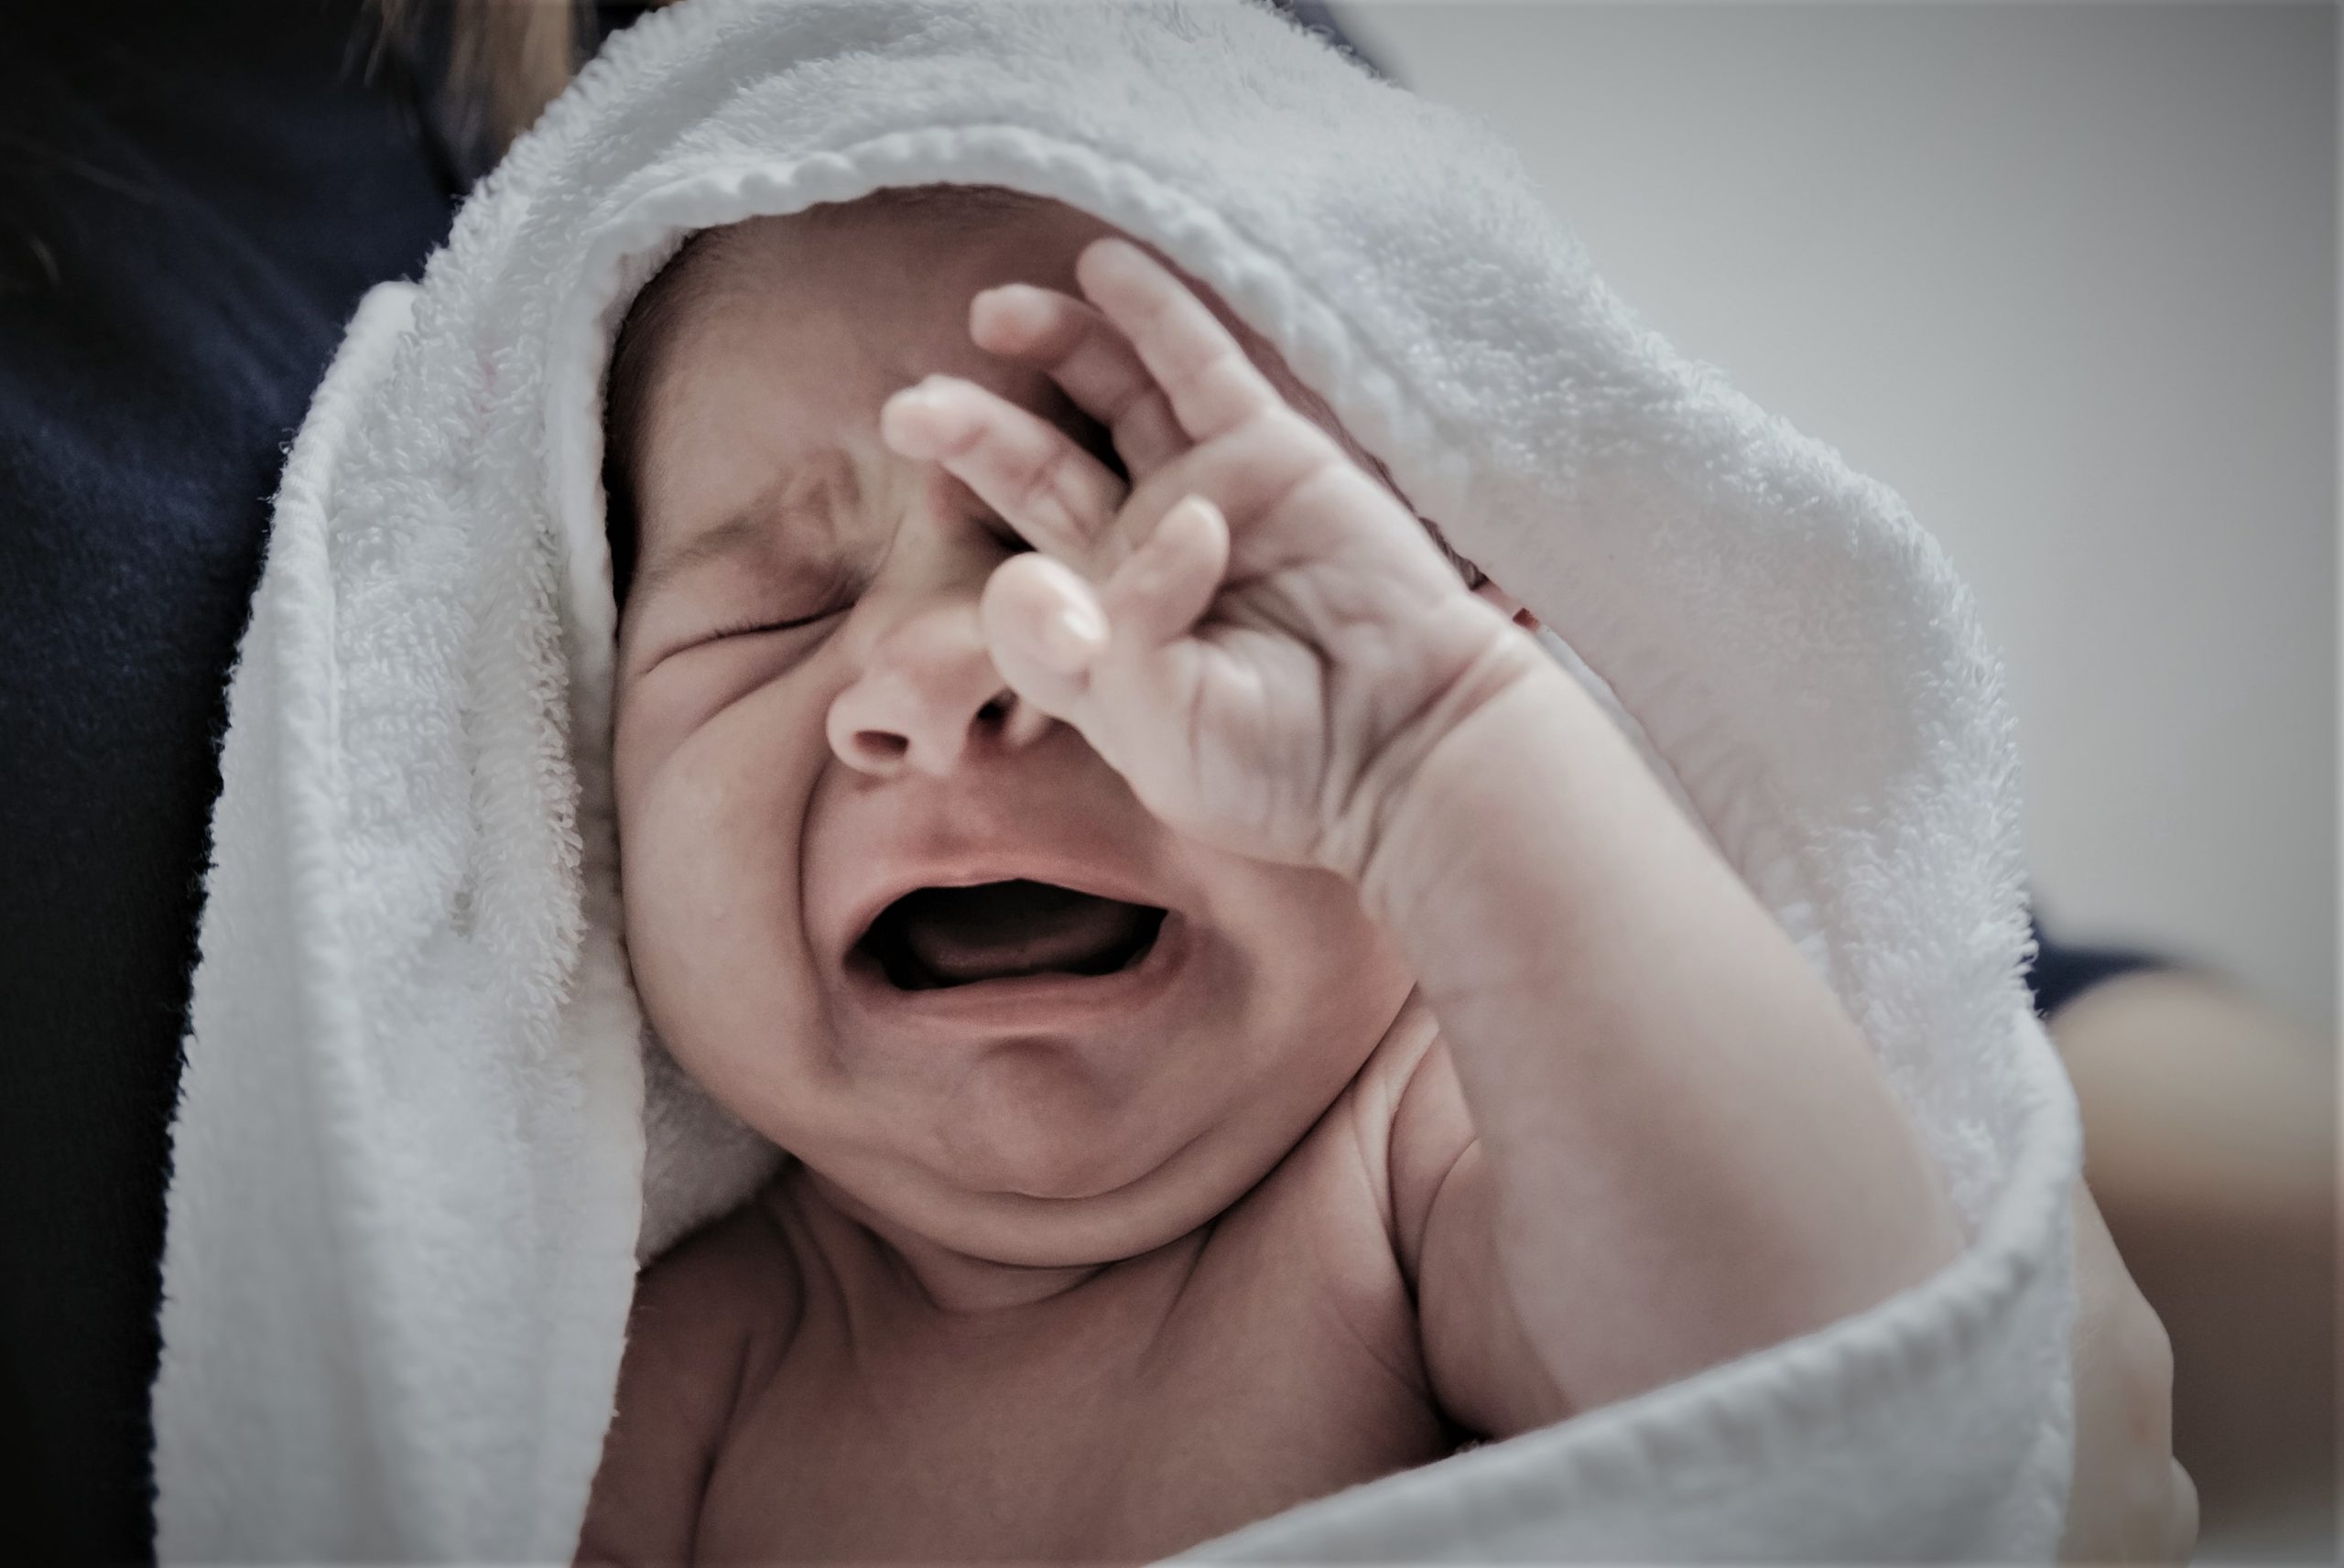 newborn baby girl crying 46VJHCF3 scaled Джавахети Джавахети